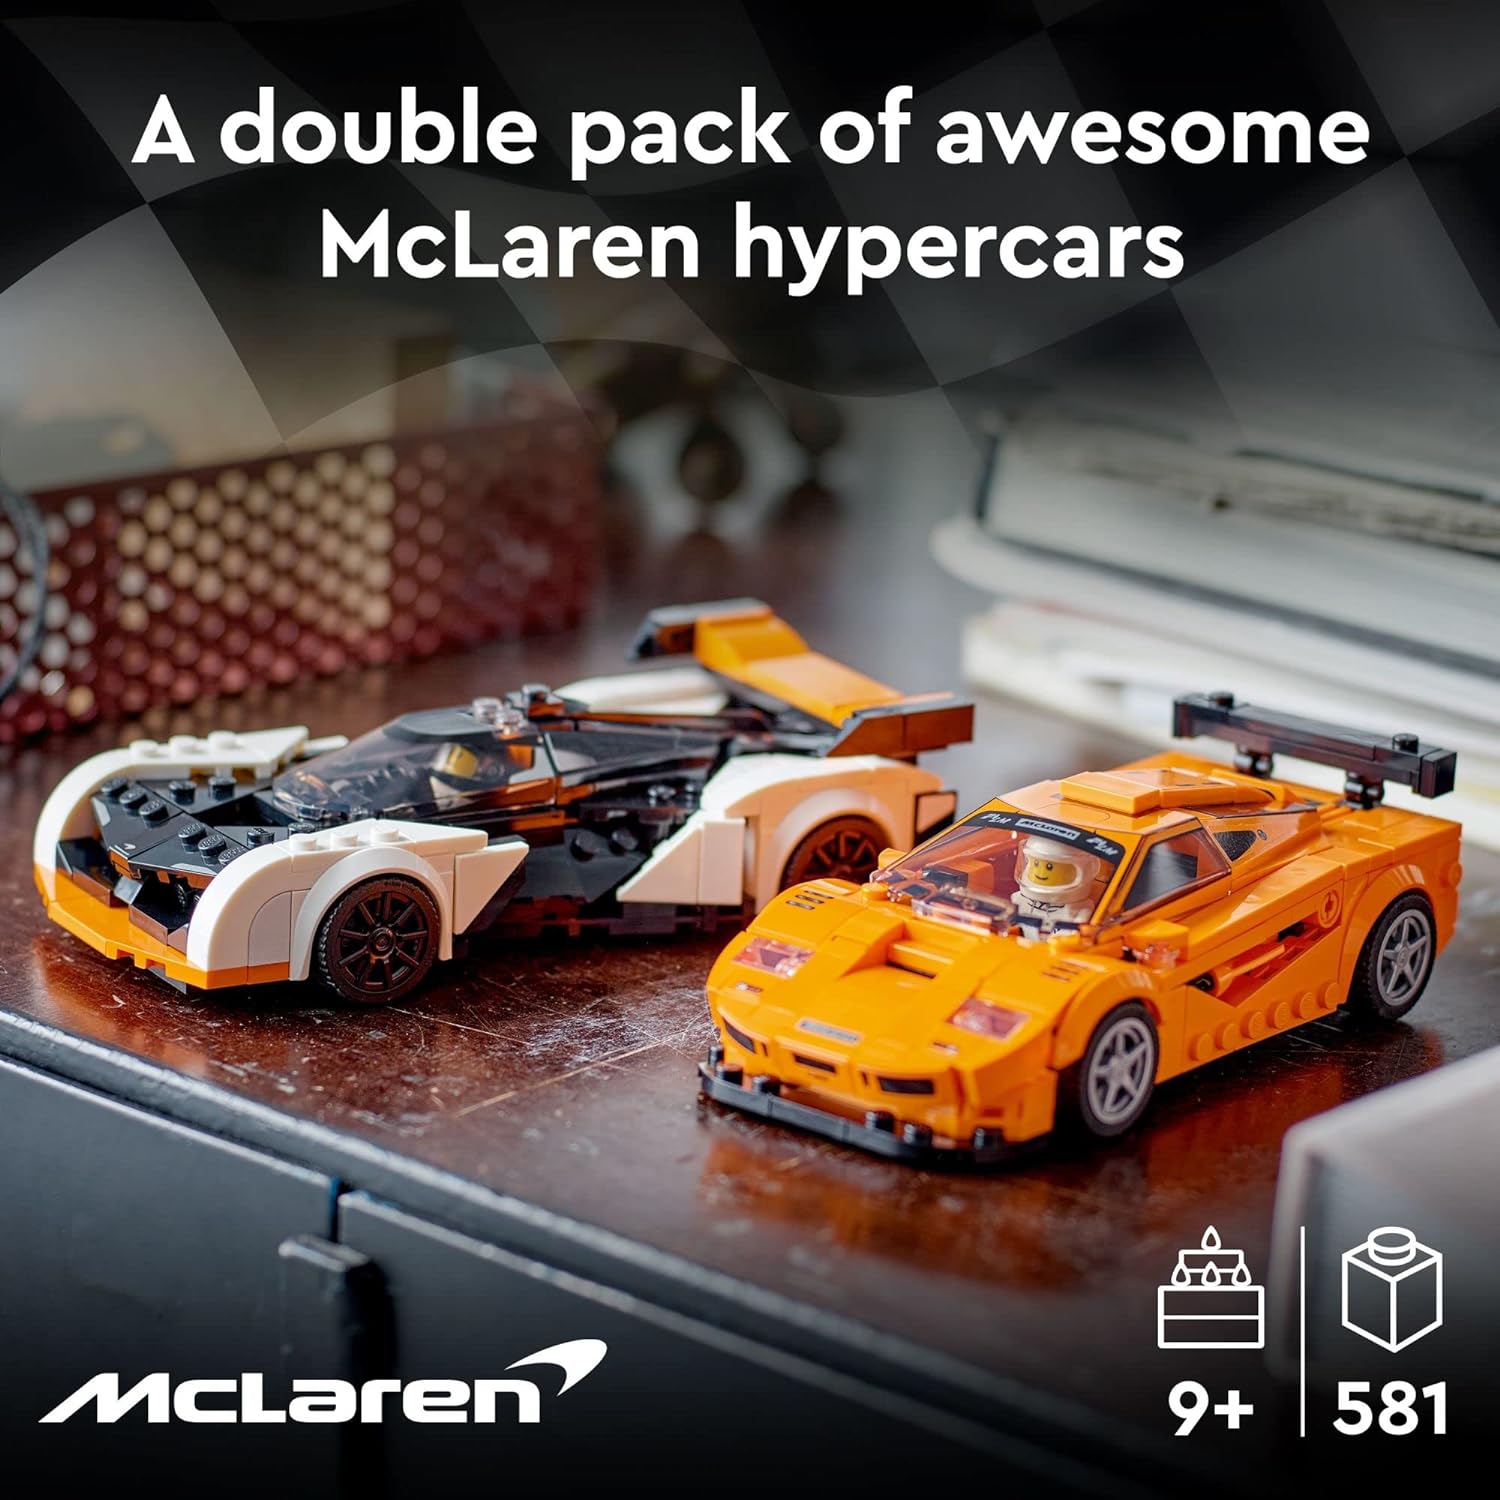 LEGO Speed Champions McLaren Solus GT & McLaren F1 LM 76918, 2-Car Pack, 581 Piece Building Kit